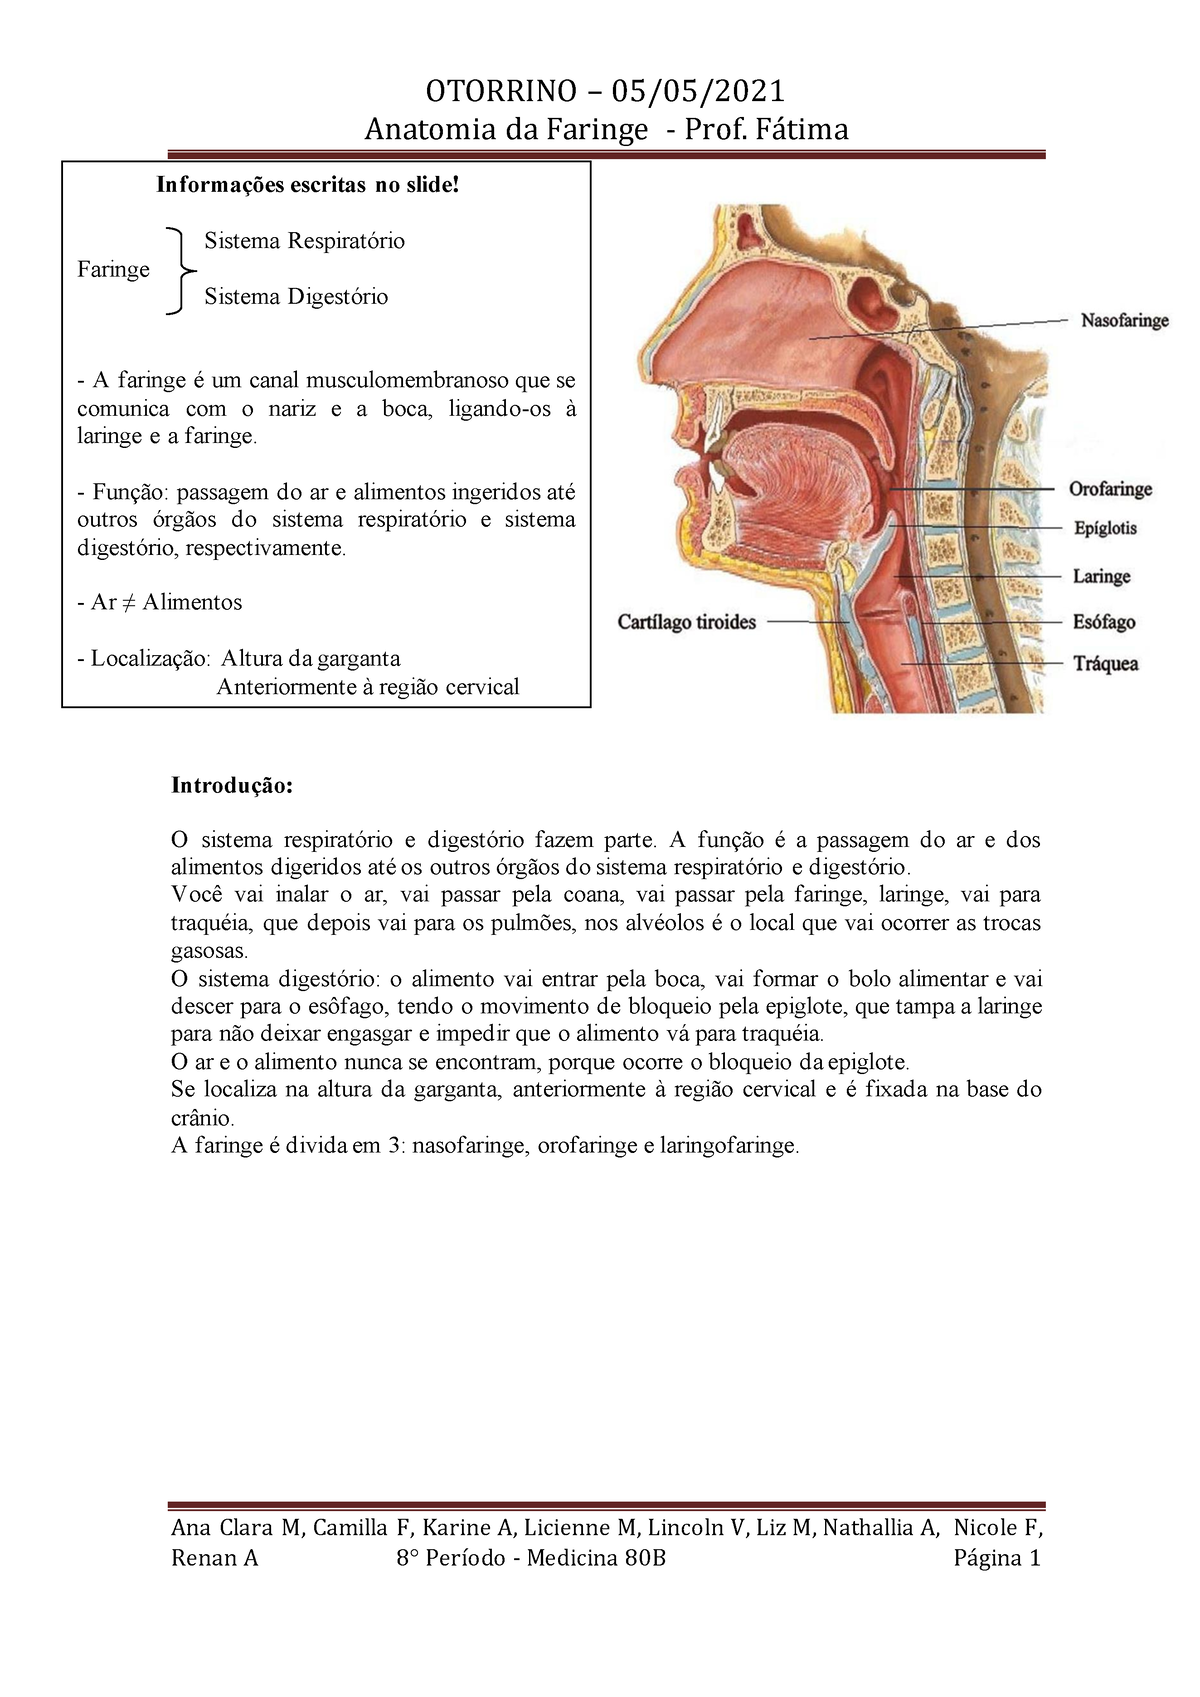 Anatomia da faringe pdf OTORRINO Anatomia da Faringe Prof Fátima Ana Clara M